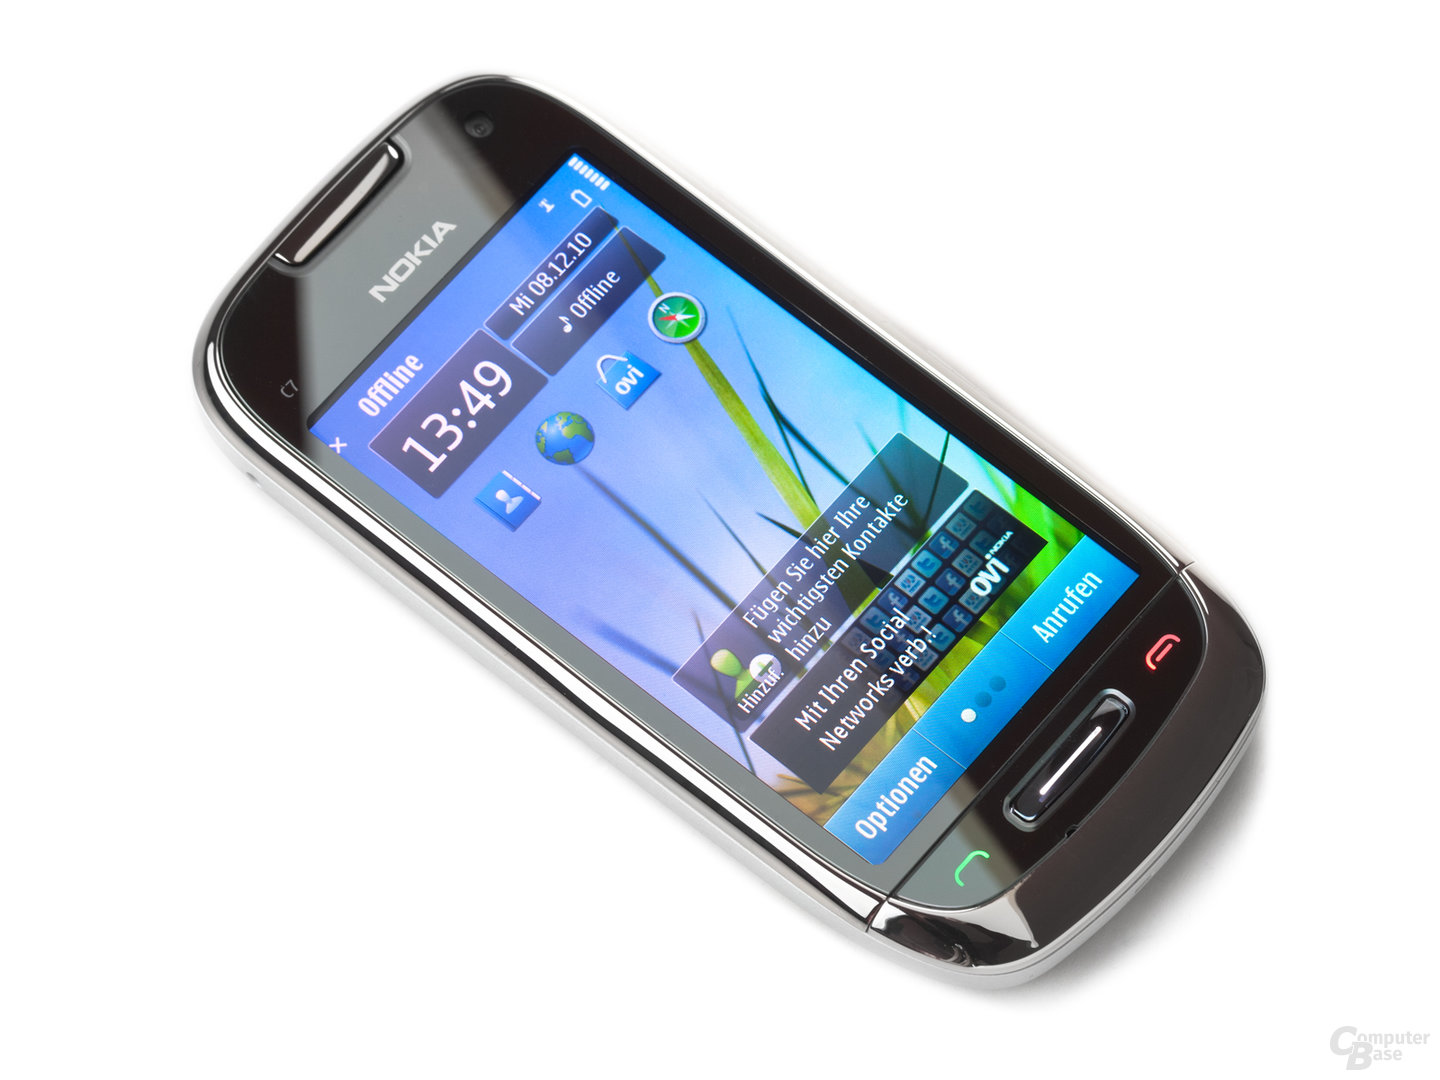 Nokia C7-00: Display